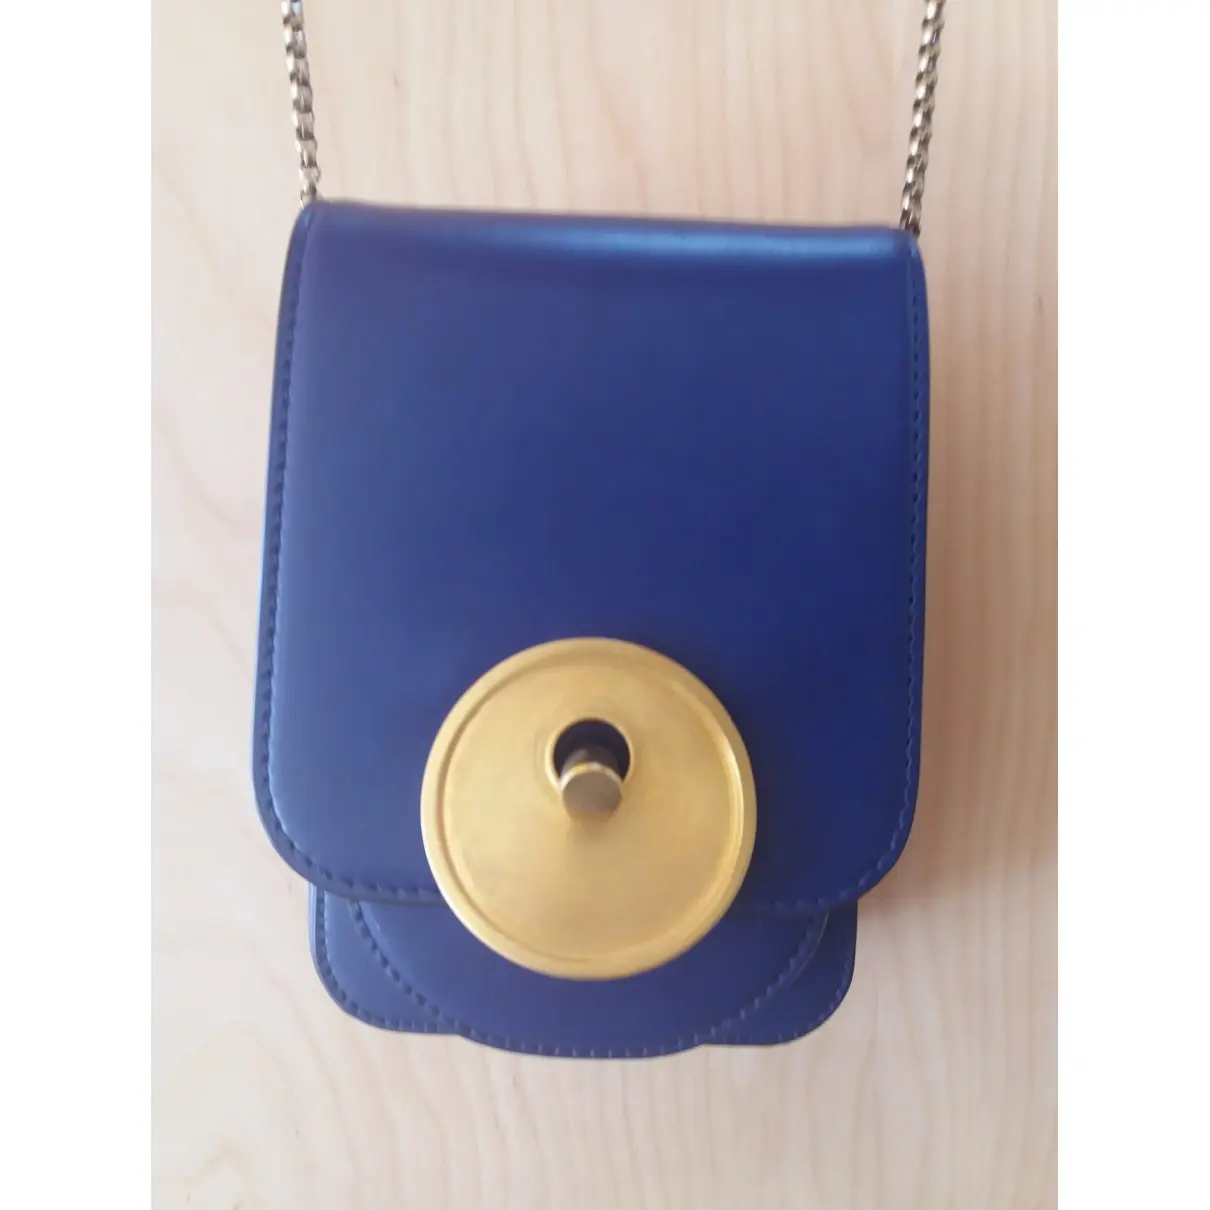 Marni Monile leather handbag for sale